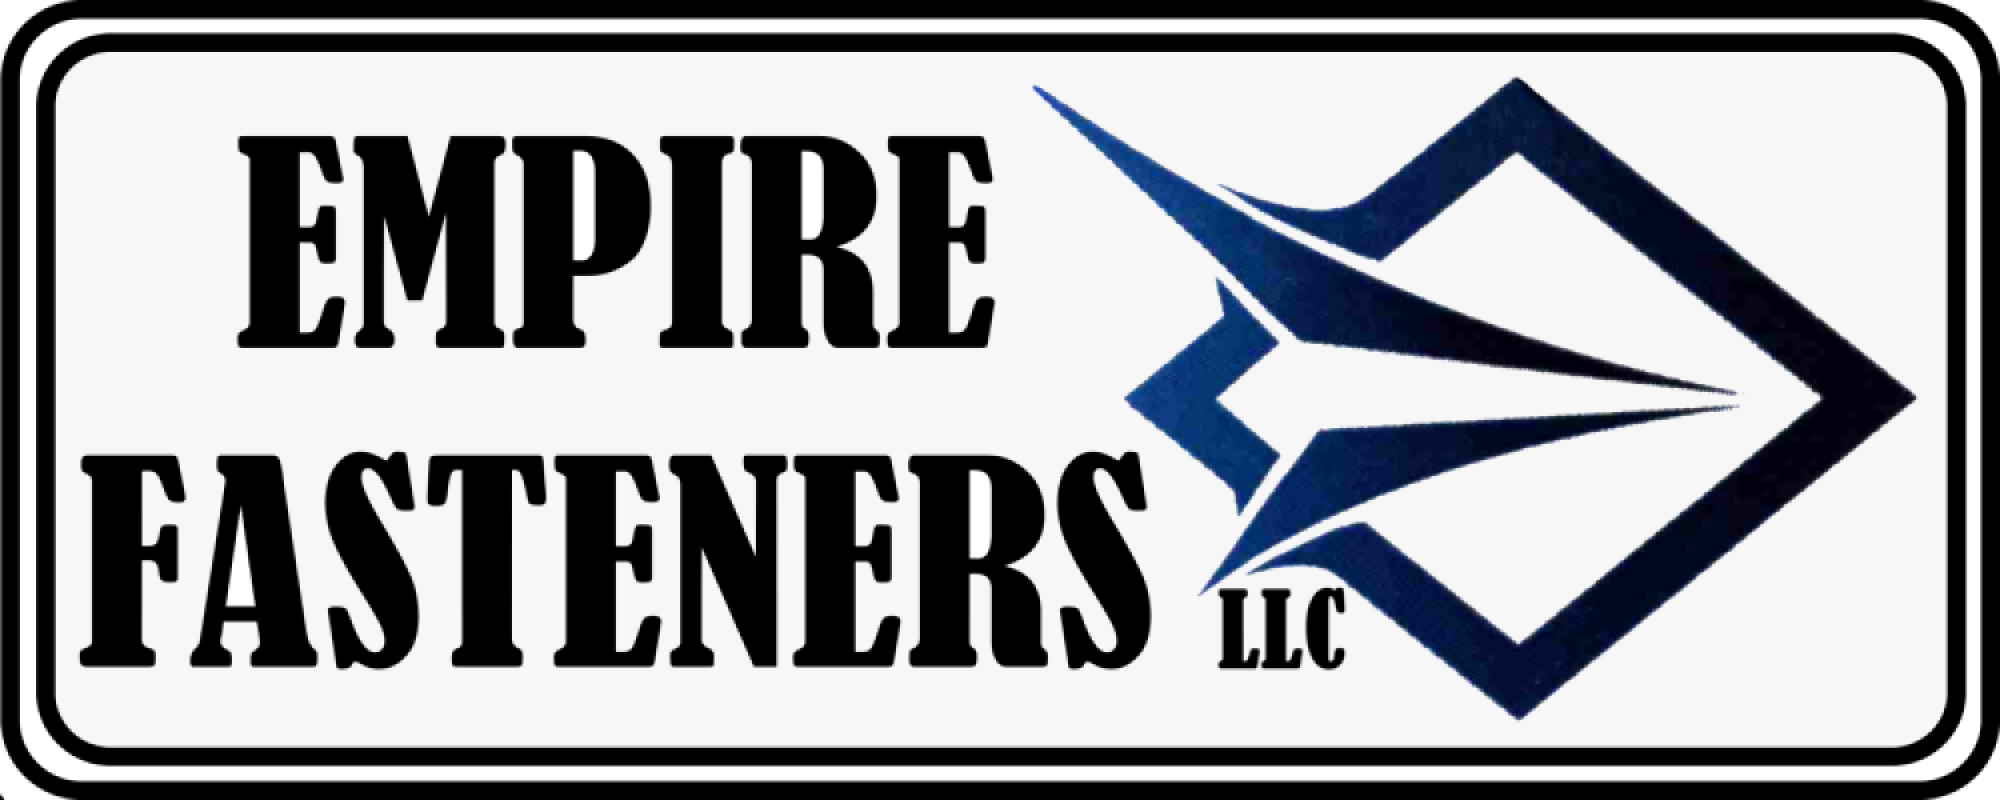 Empire Fasteners, LLC